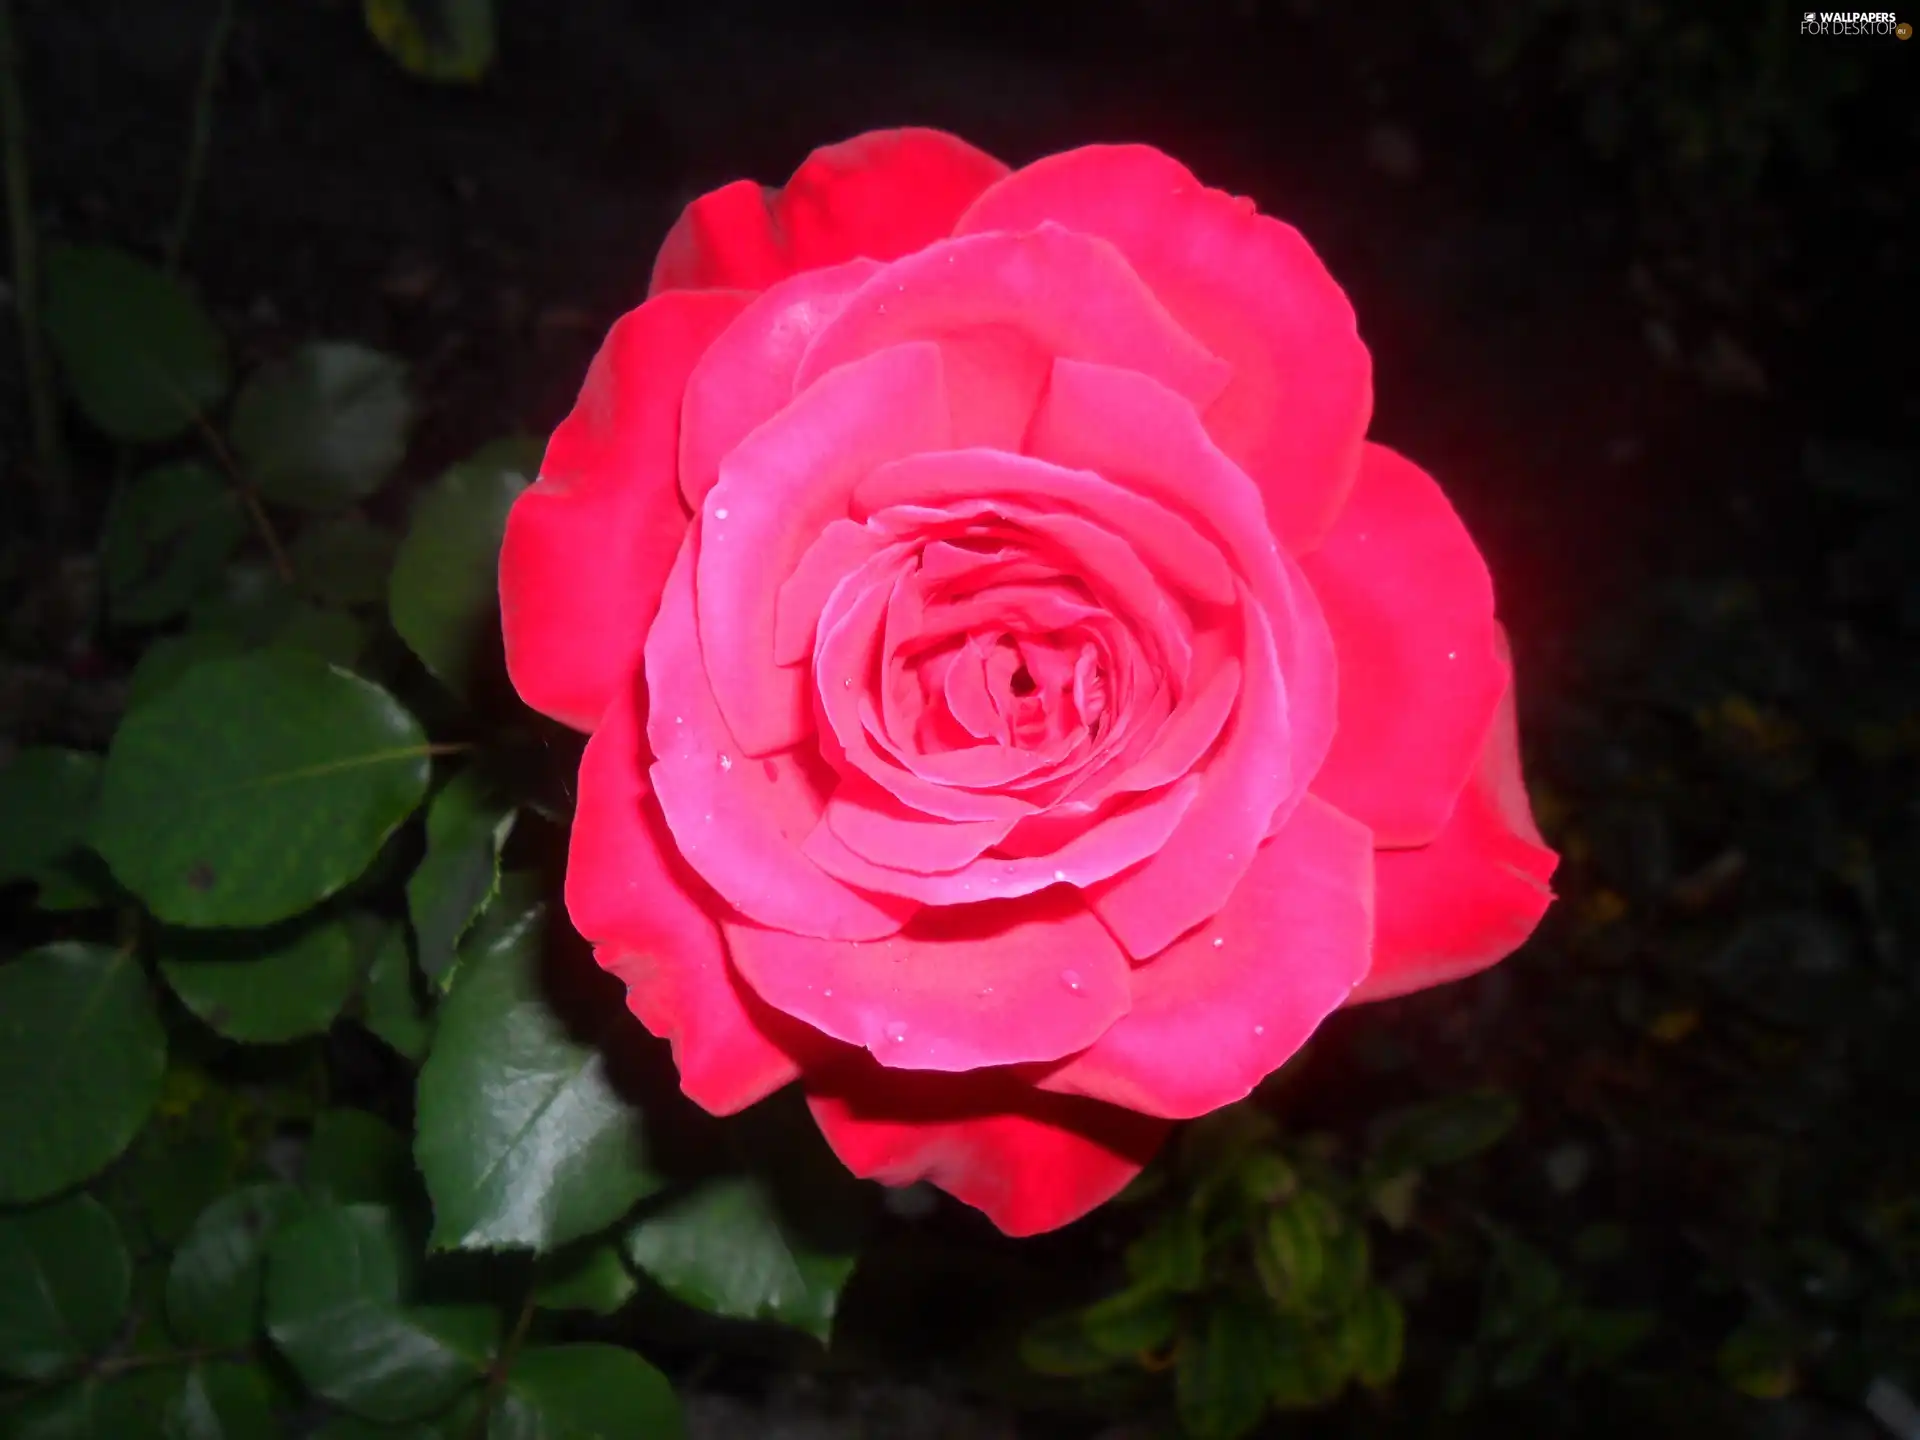 Beauty, rose - For desktop wallpapers: 2560x1920